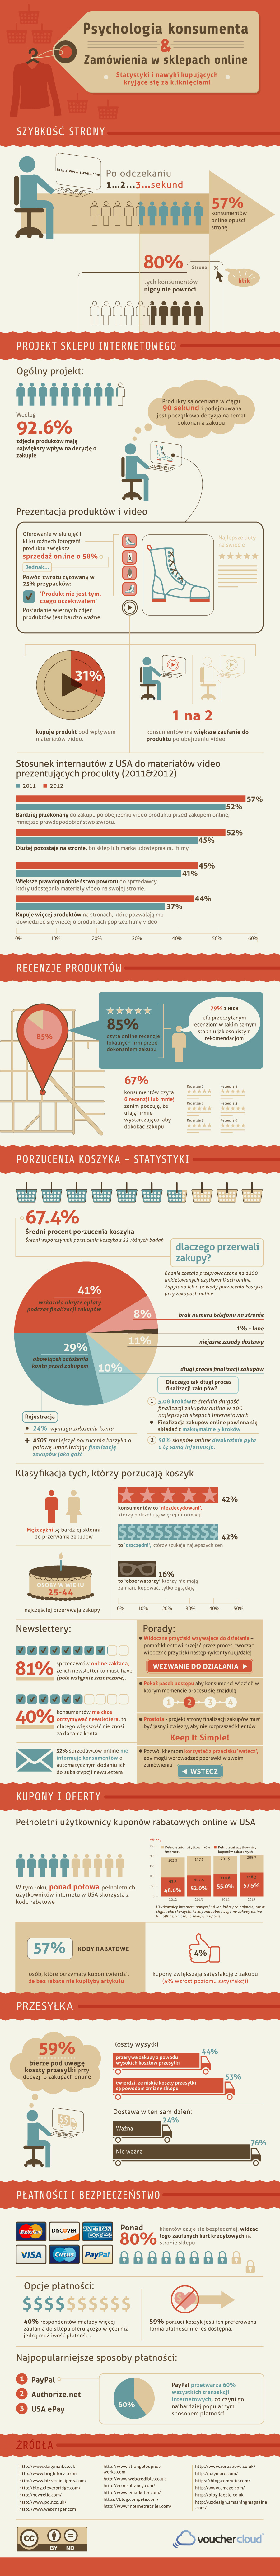 infografika Psychologia konsumenta